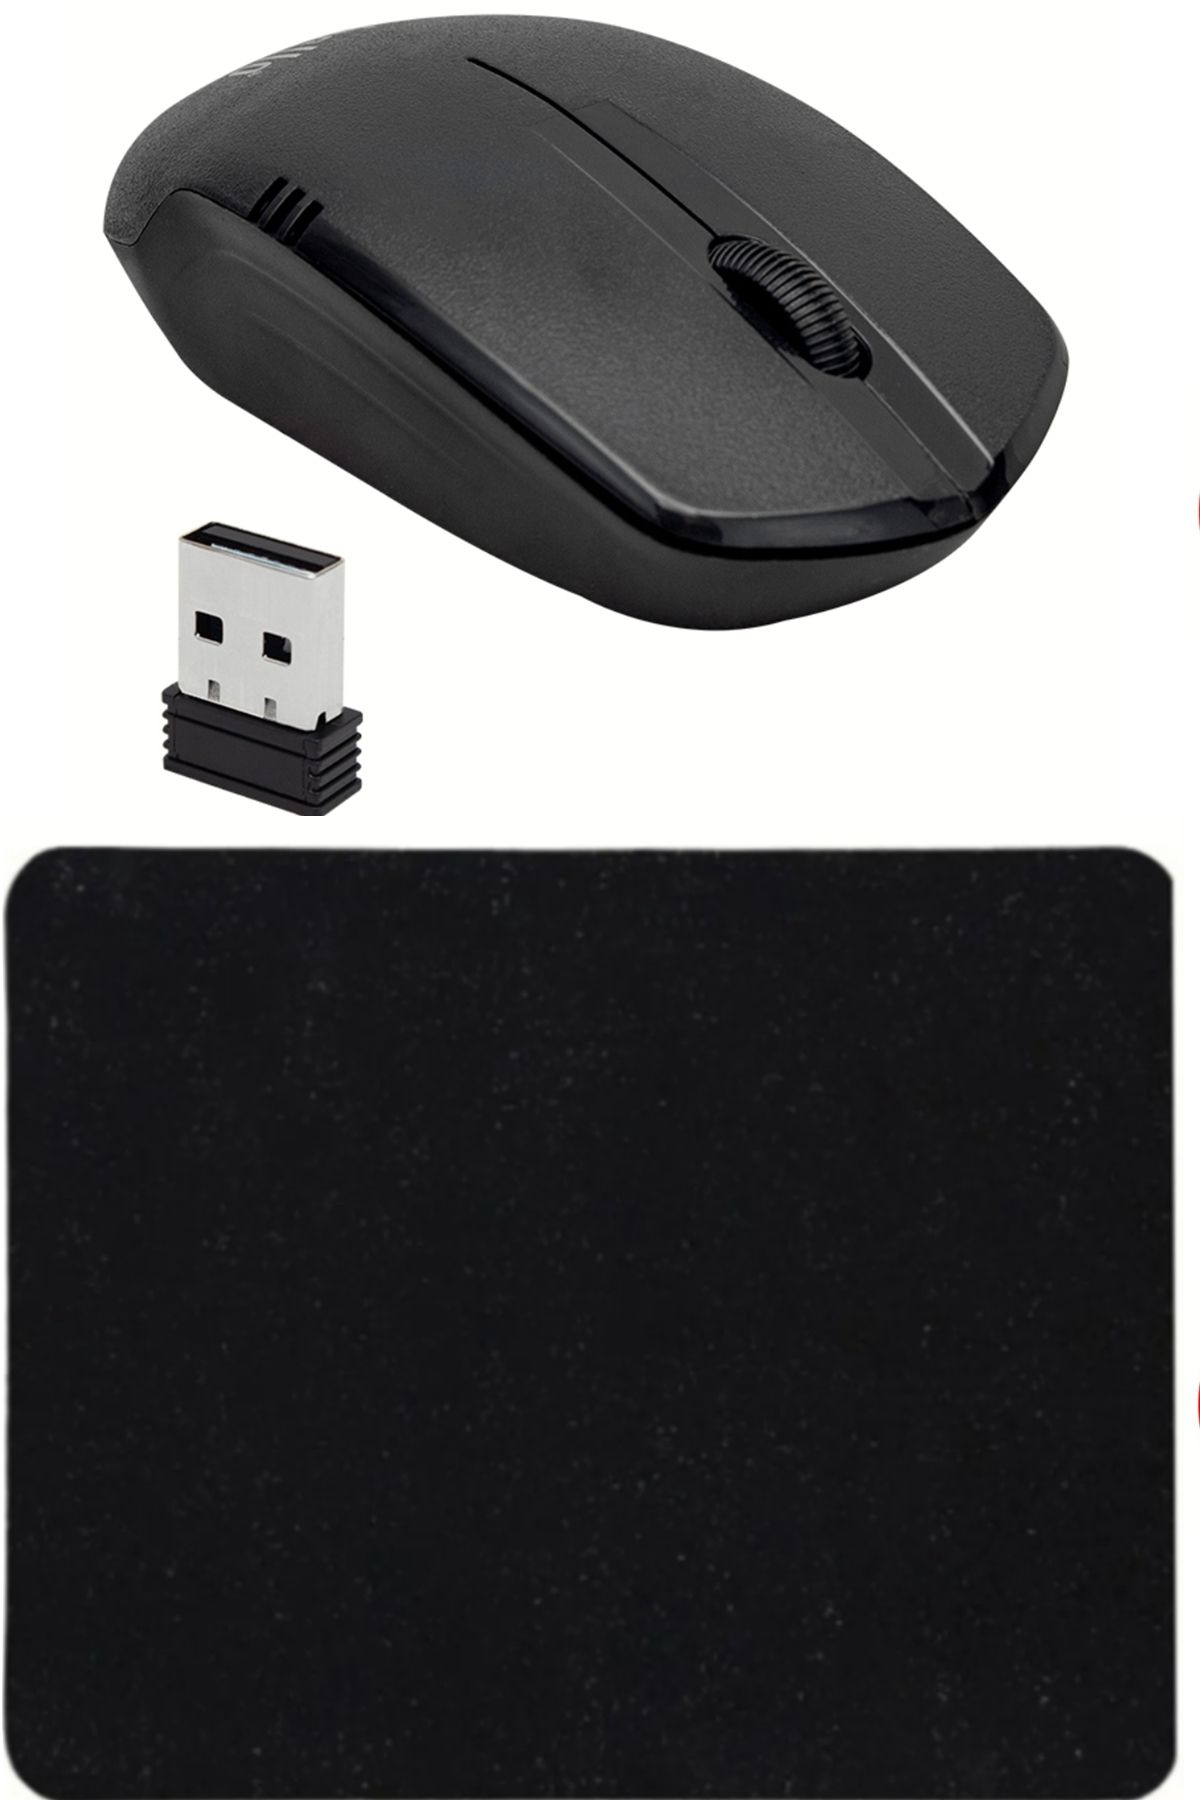 usin Kablosuz Wireless Mouse Kompakt Bilgisayar Faresi Notebook Pc Windows 7 10 11 Uyumlu Mause